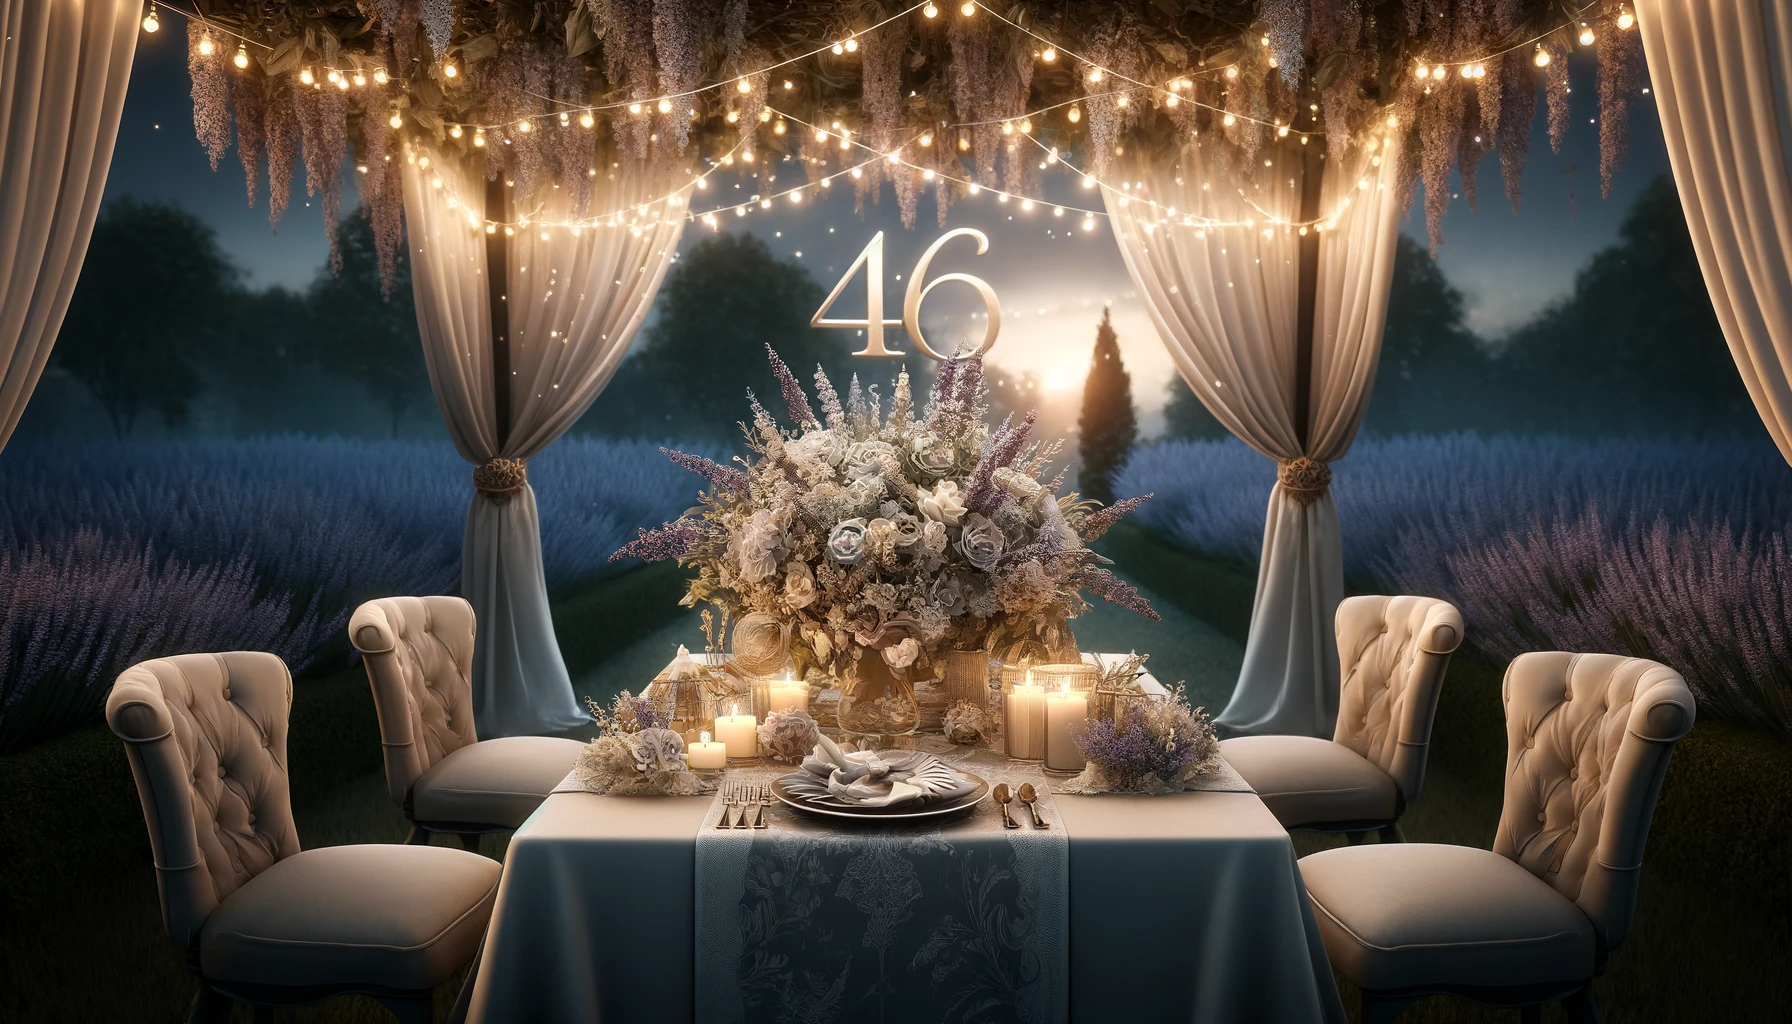 Celebration tips for 46th Wedding Anniversary